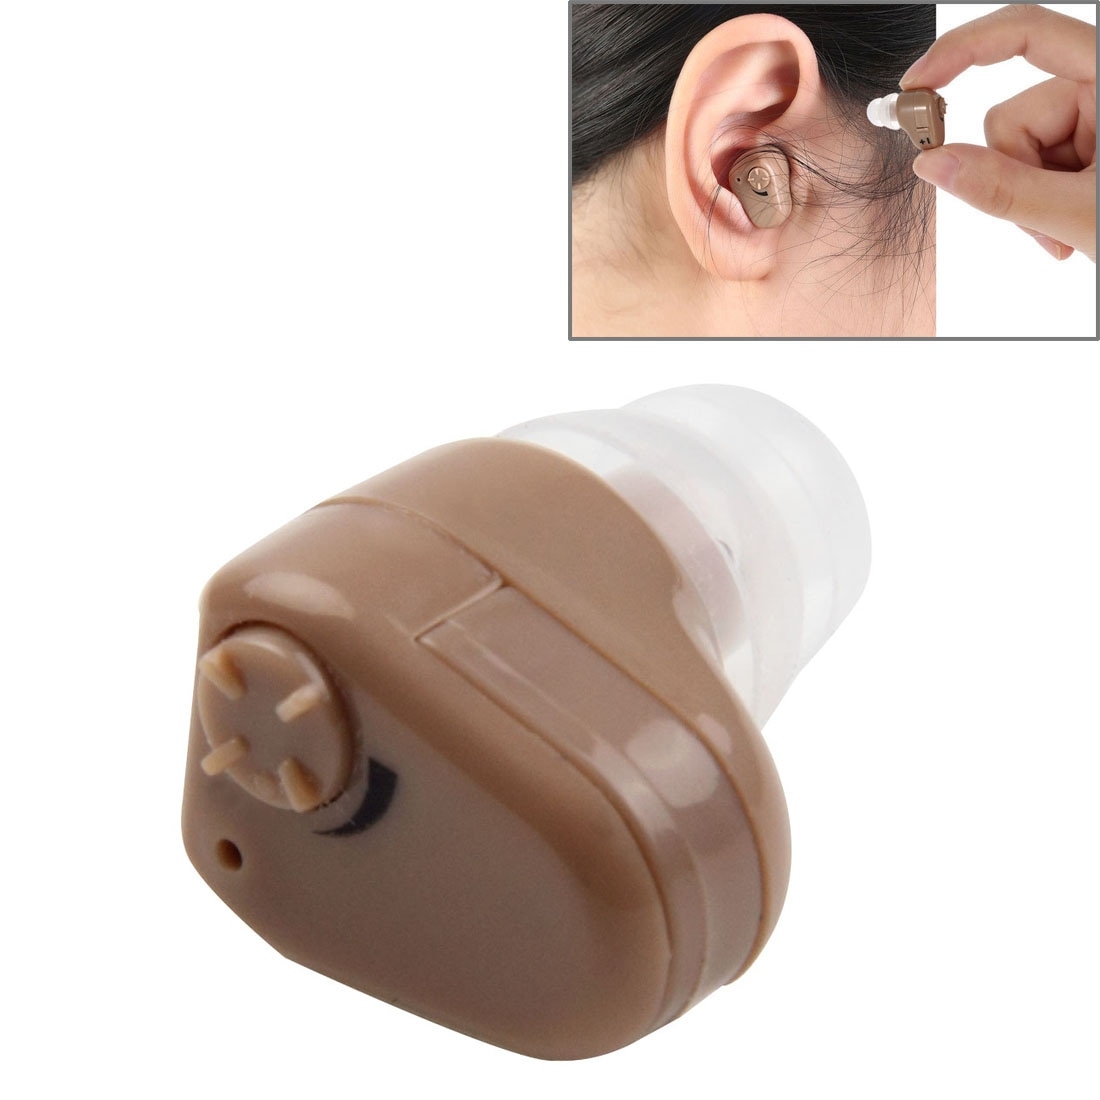 Ultratunn billig Hörapparat